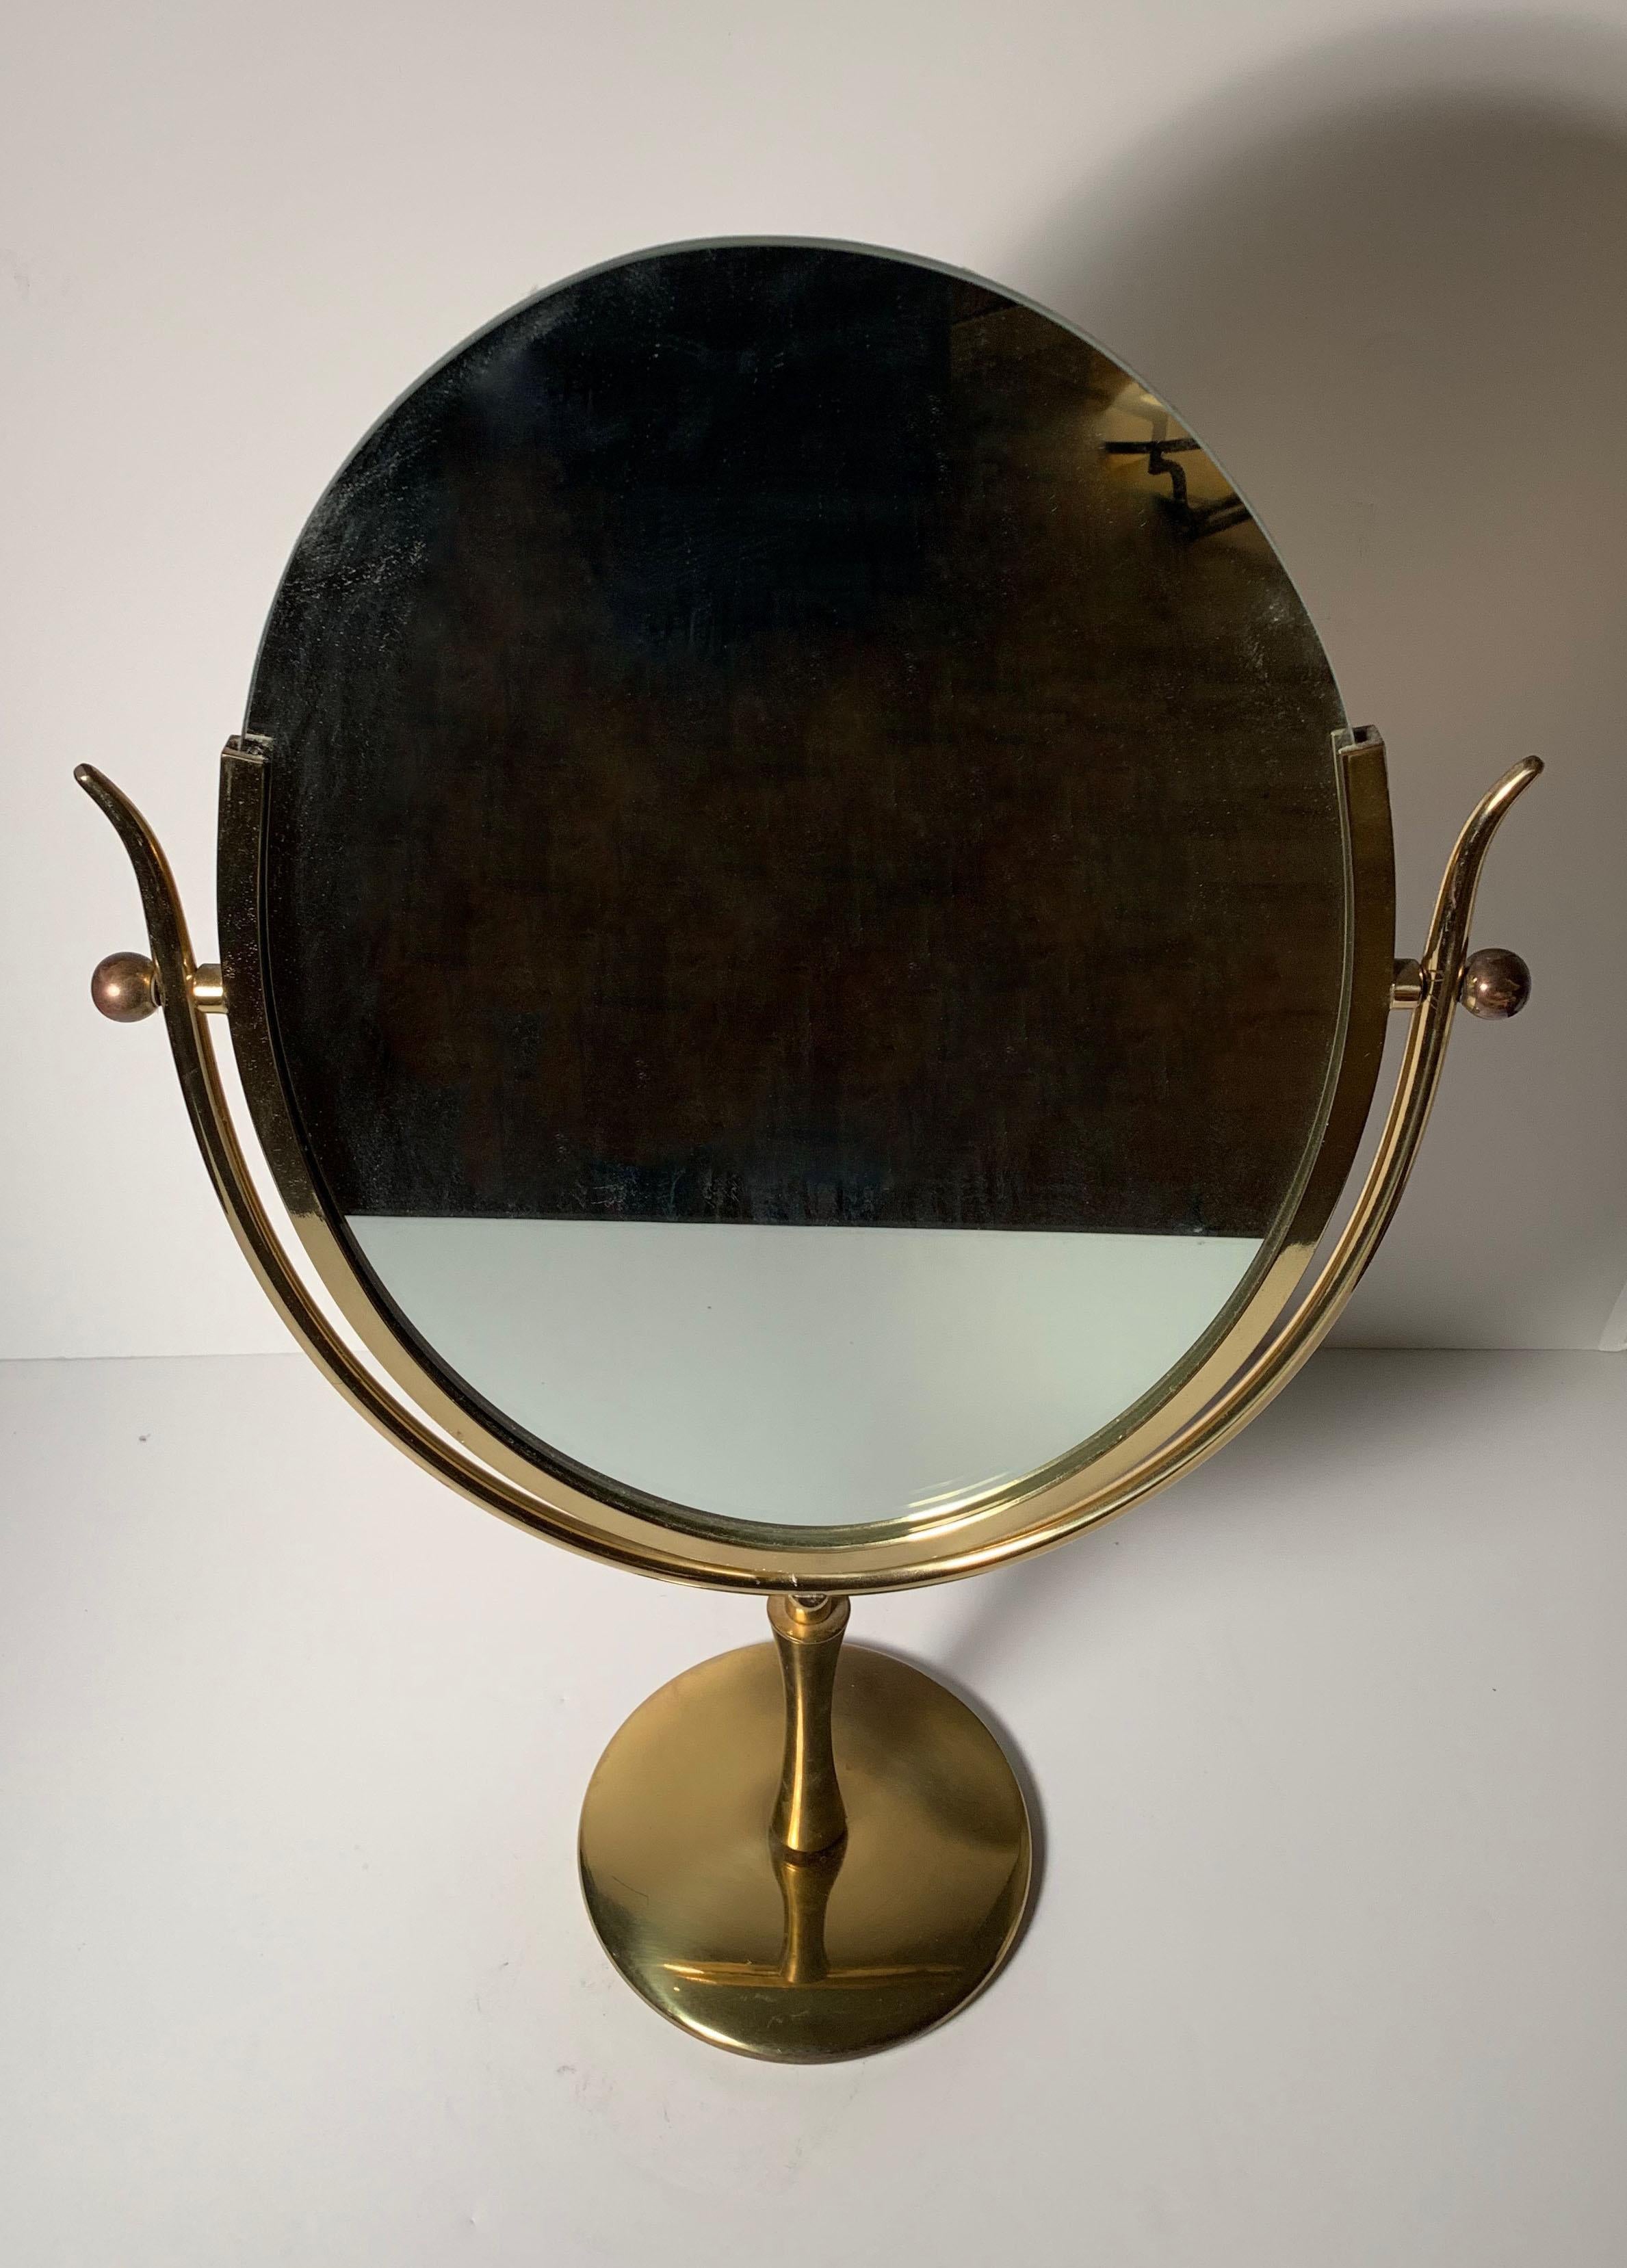 Vintage brass table mirror attributed to Charles Hollis Jones.